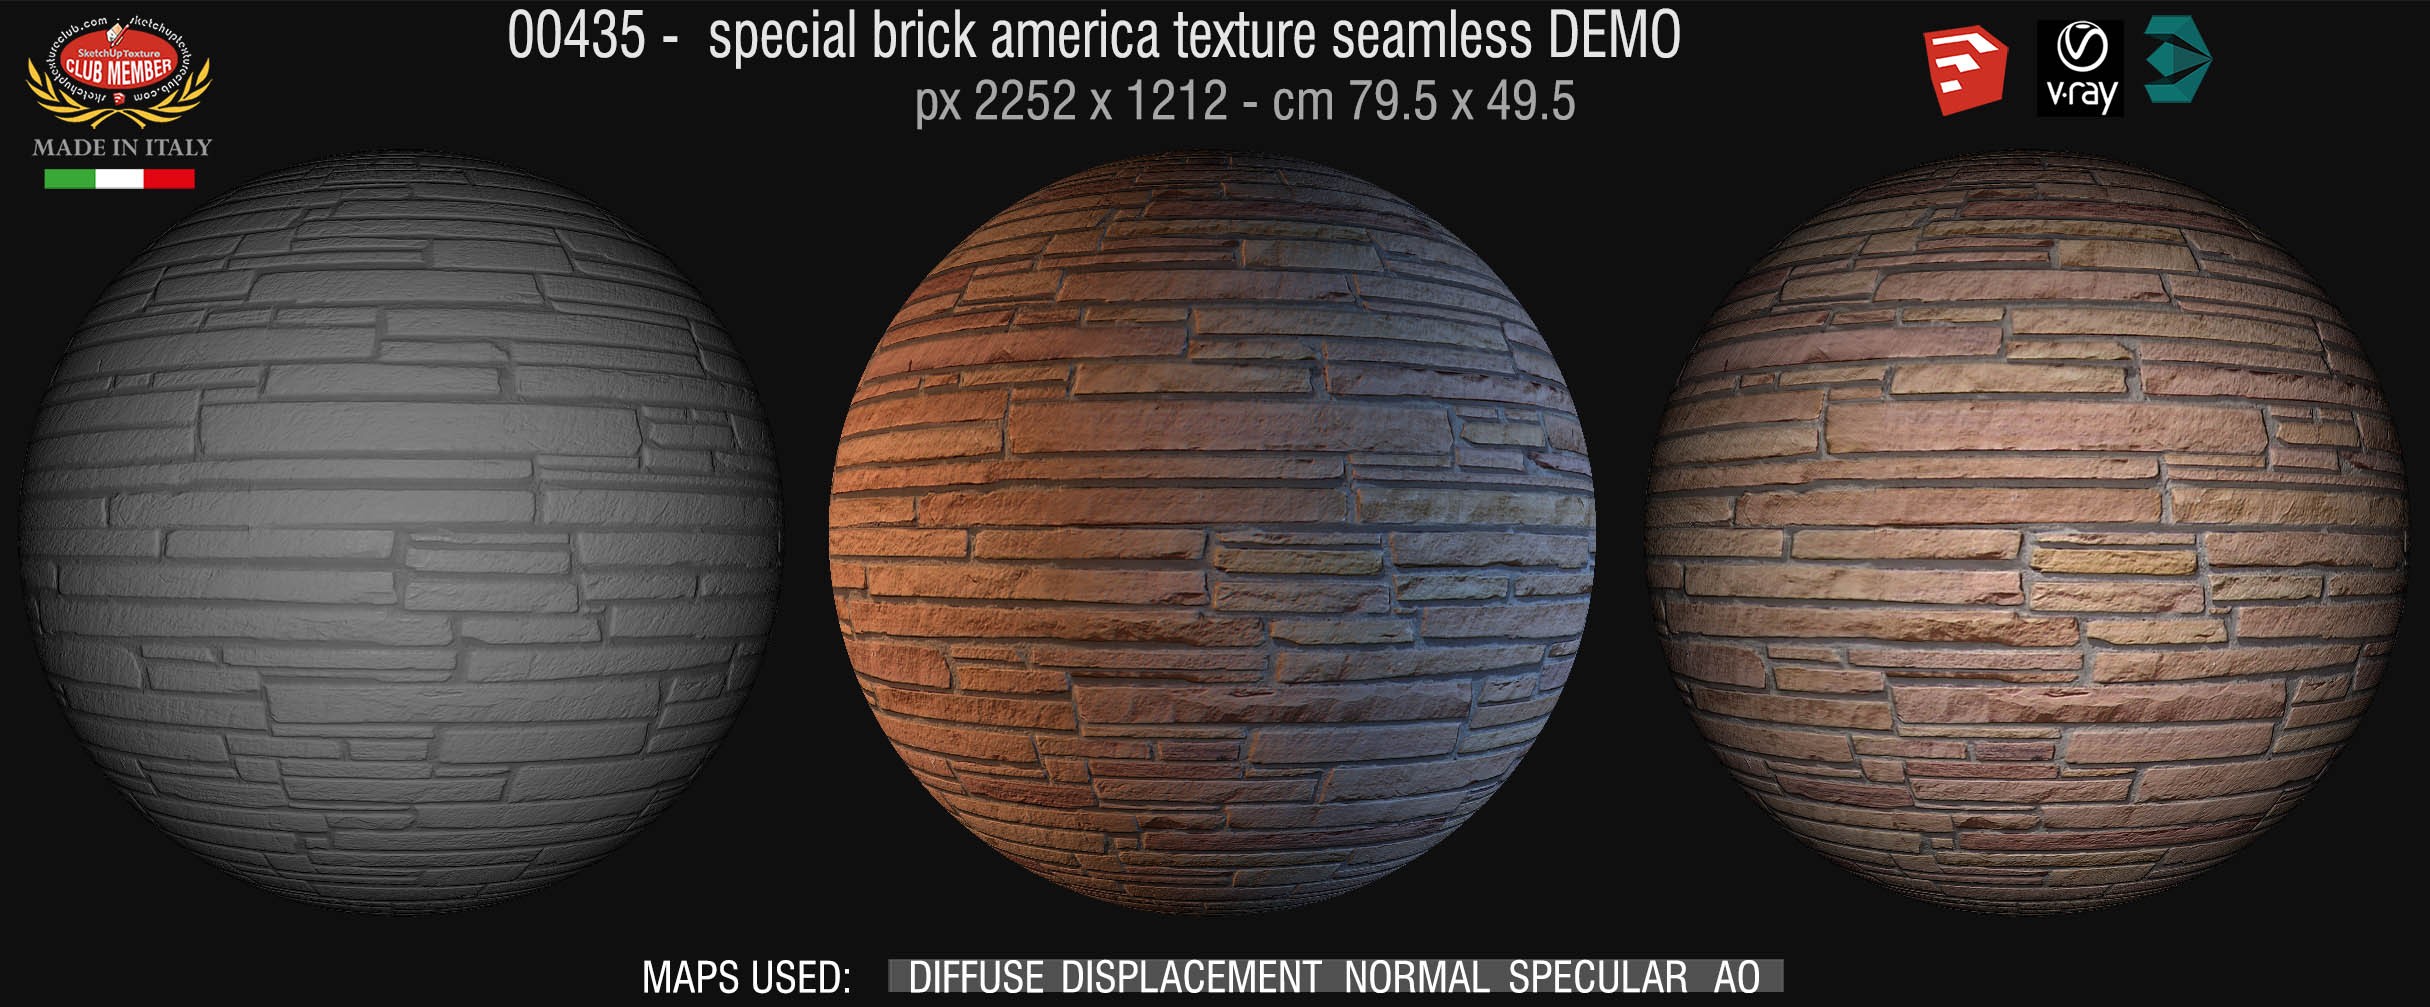 00435 Special brick america texture seamless + maps DEMO